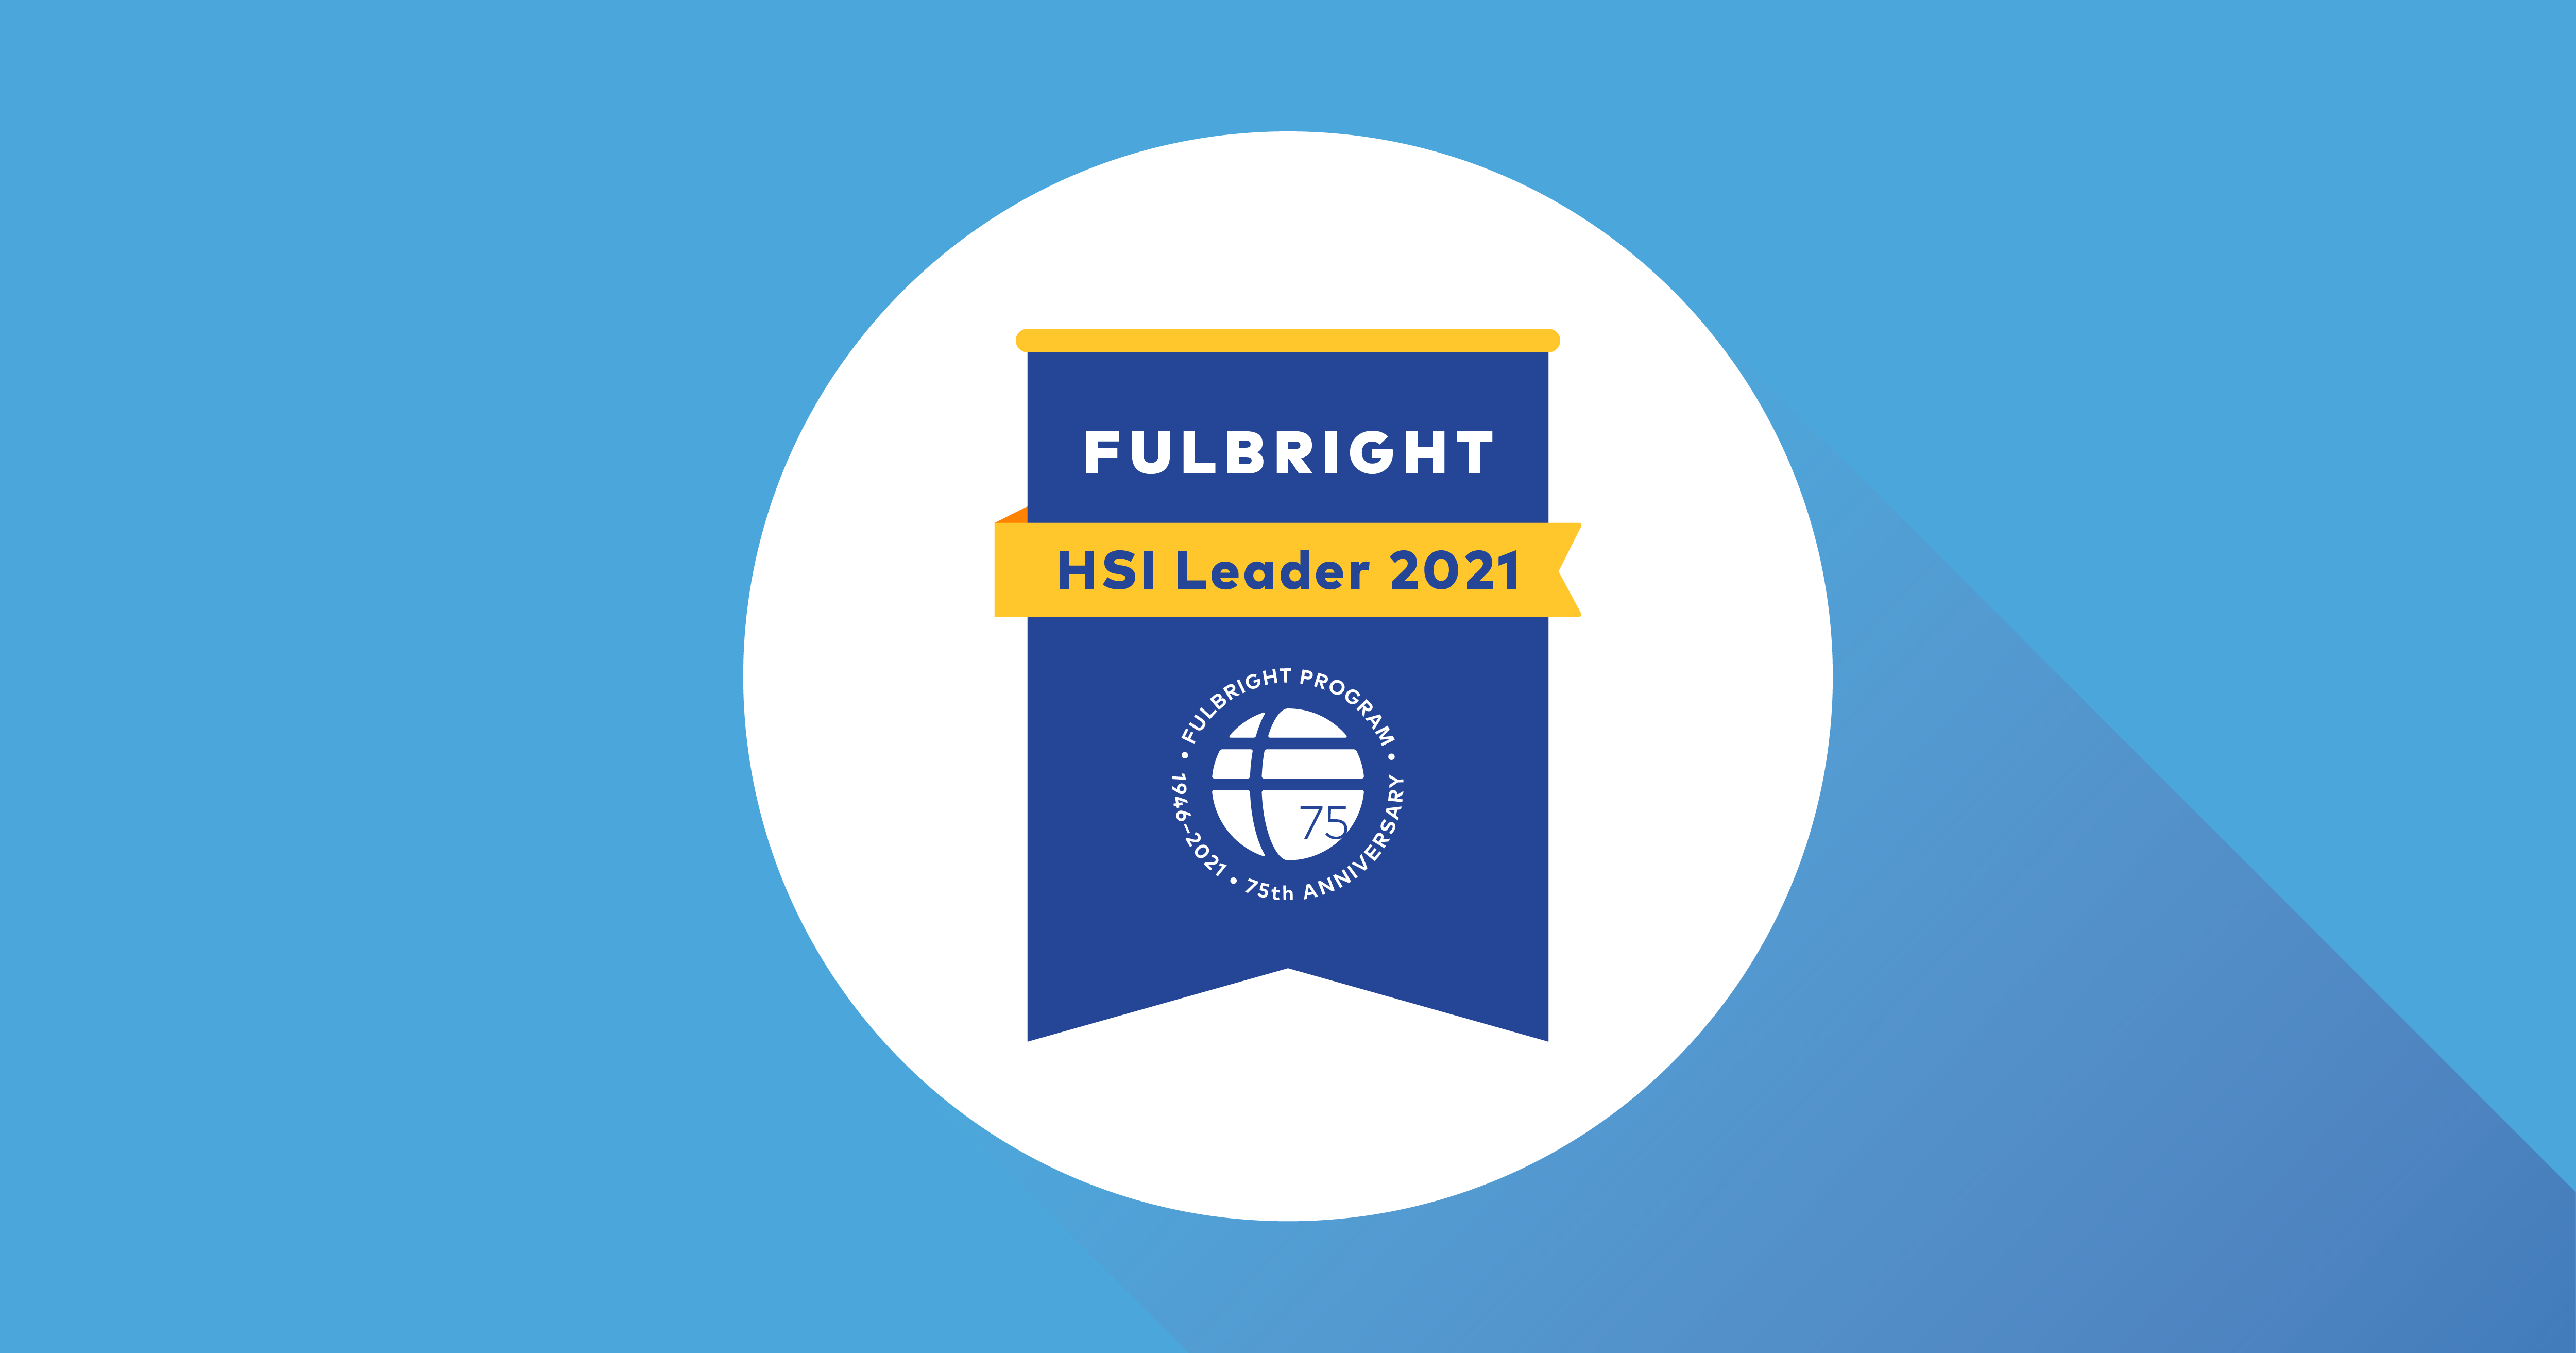 Fulbright HSI Leader 2021 badge on blue background